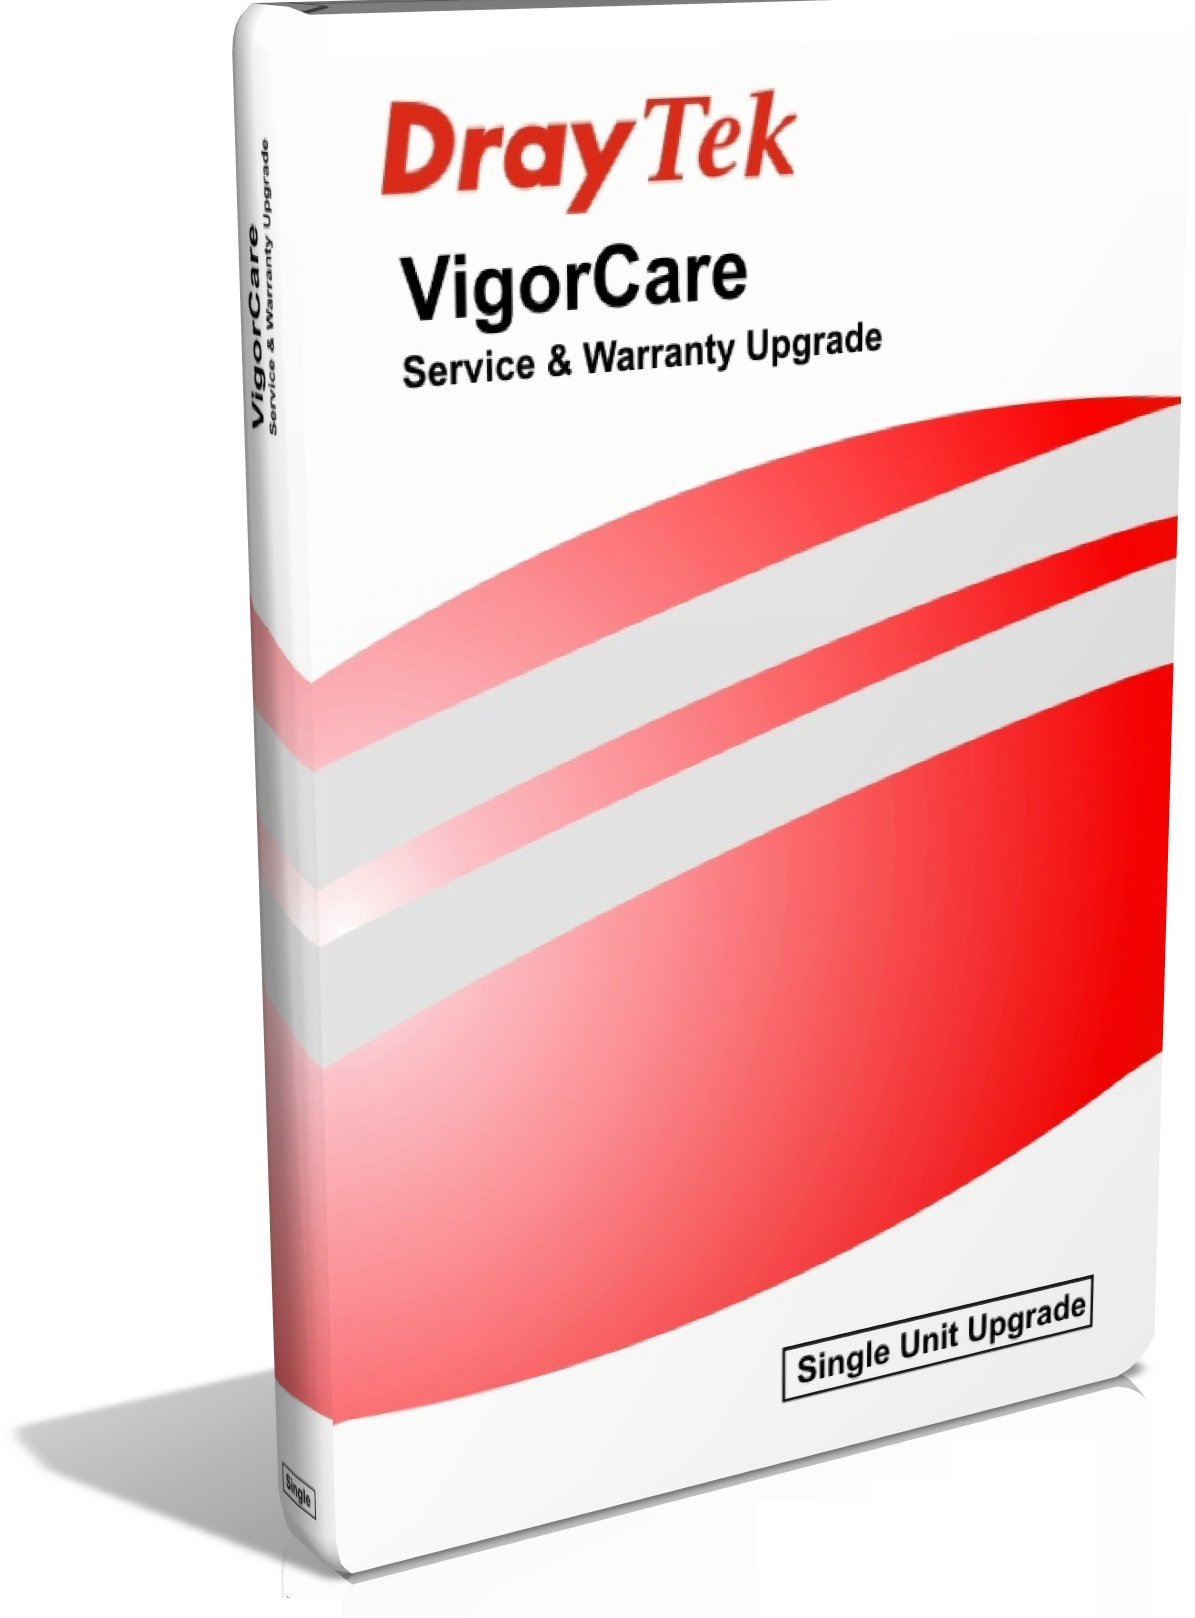 DrayTek VigorCare Extended Warranty B5 5 Year Care Package